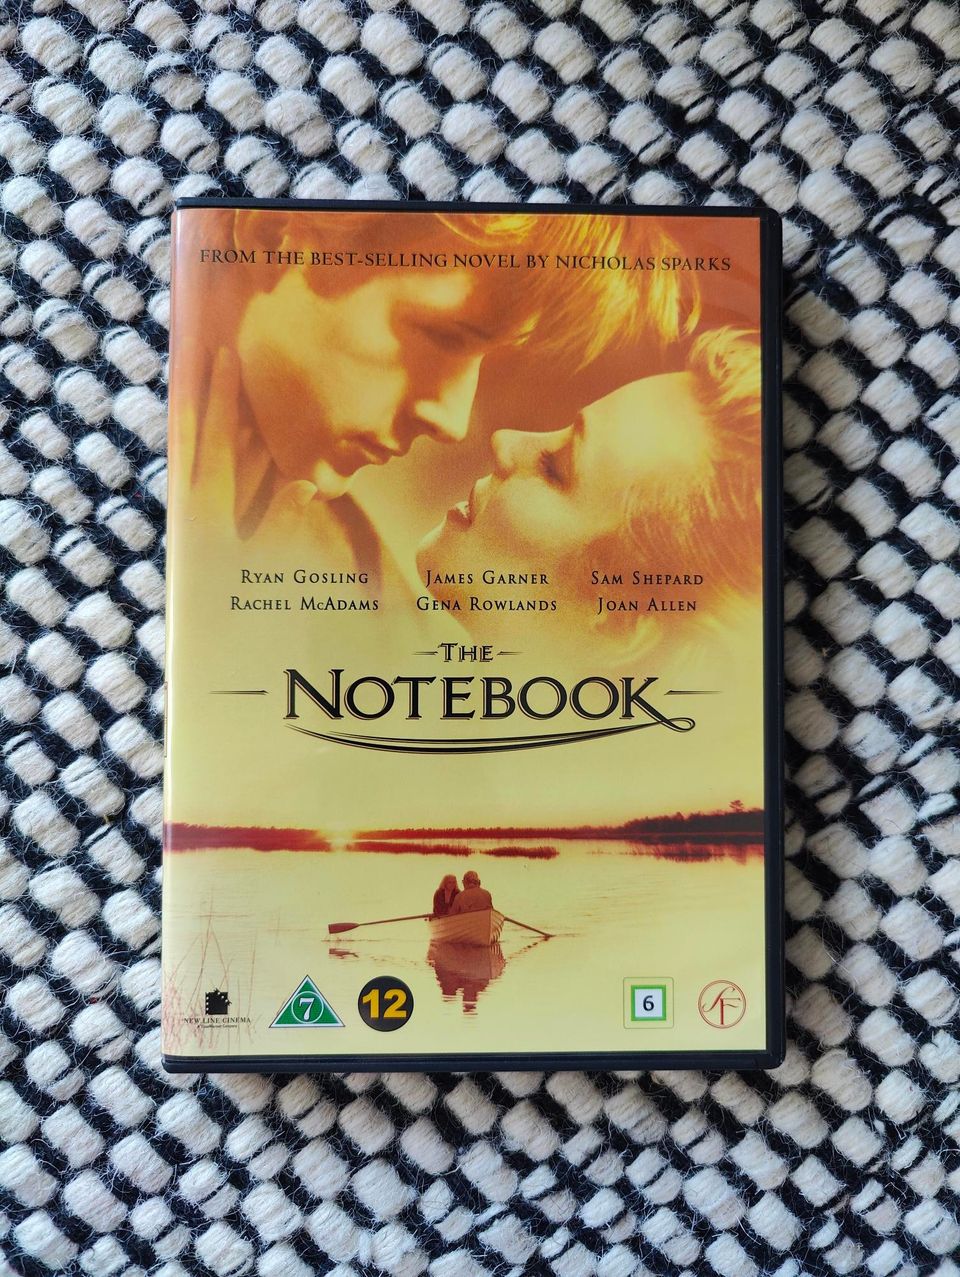 The Notebook DVD